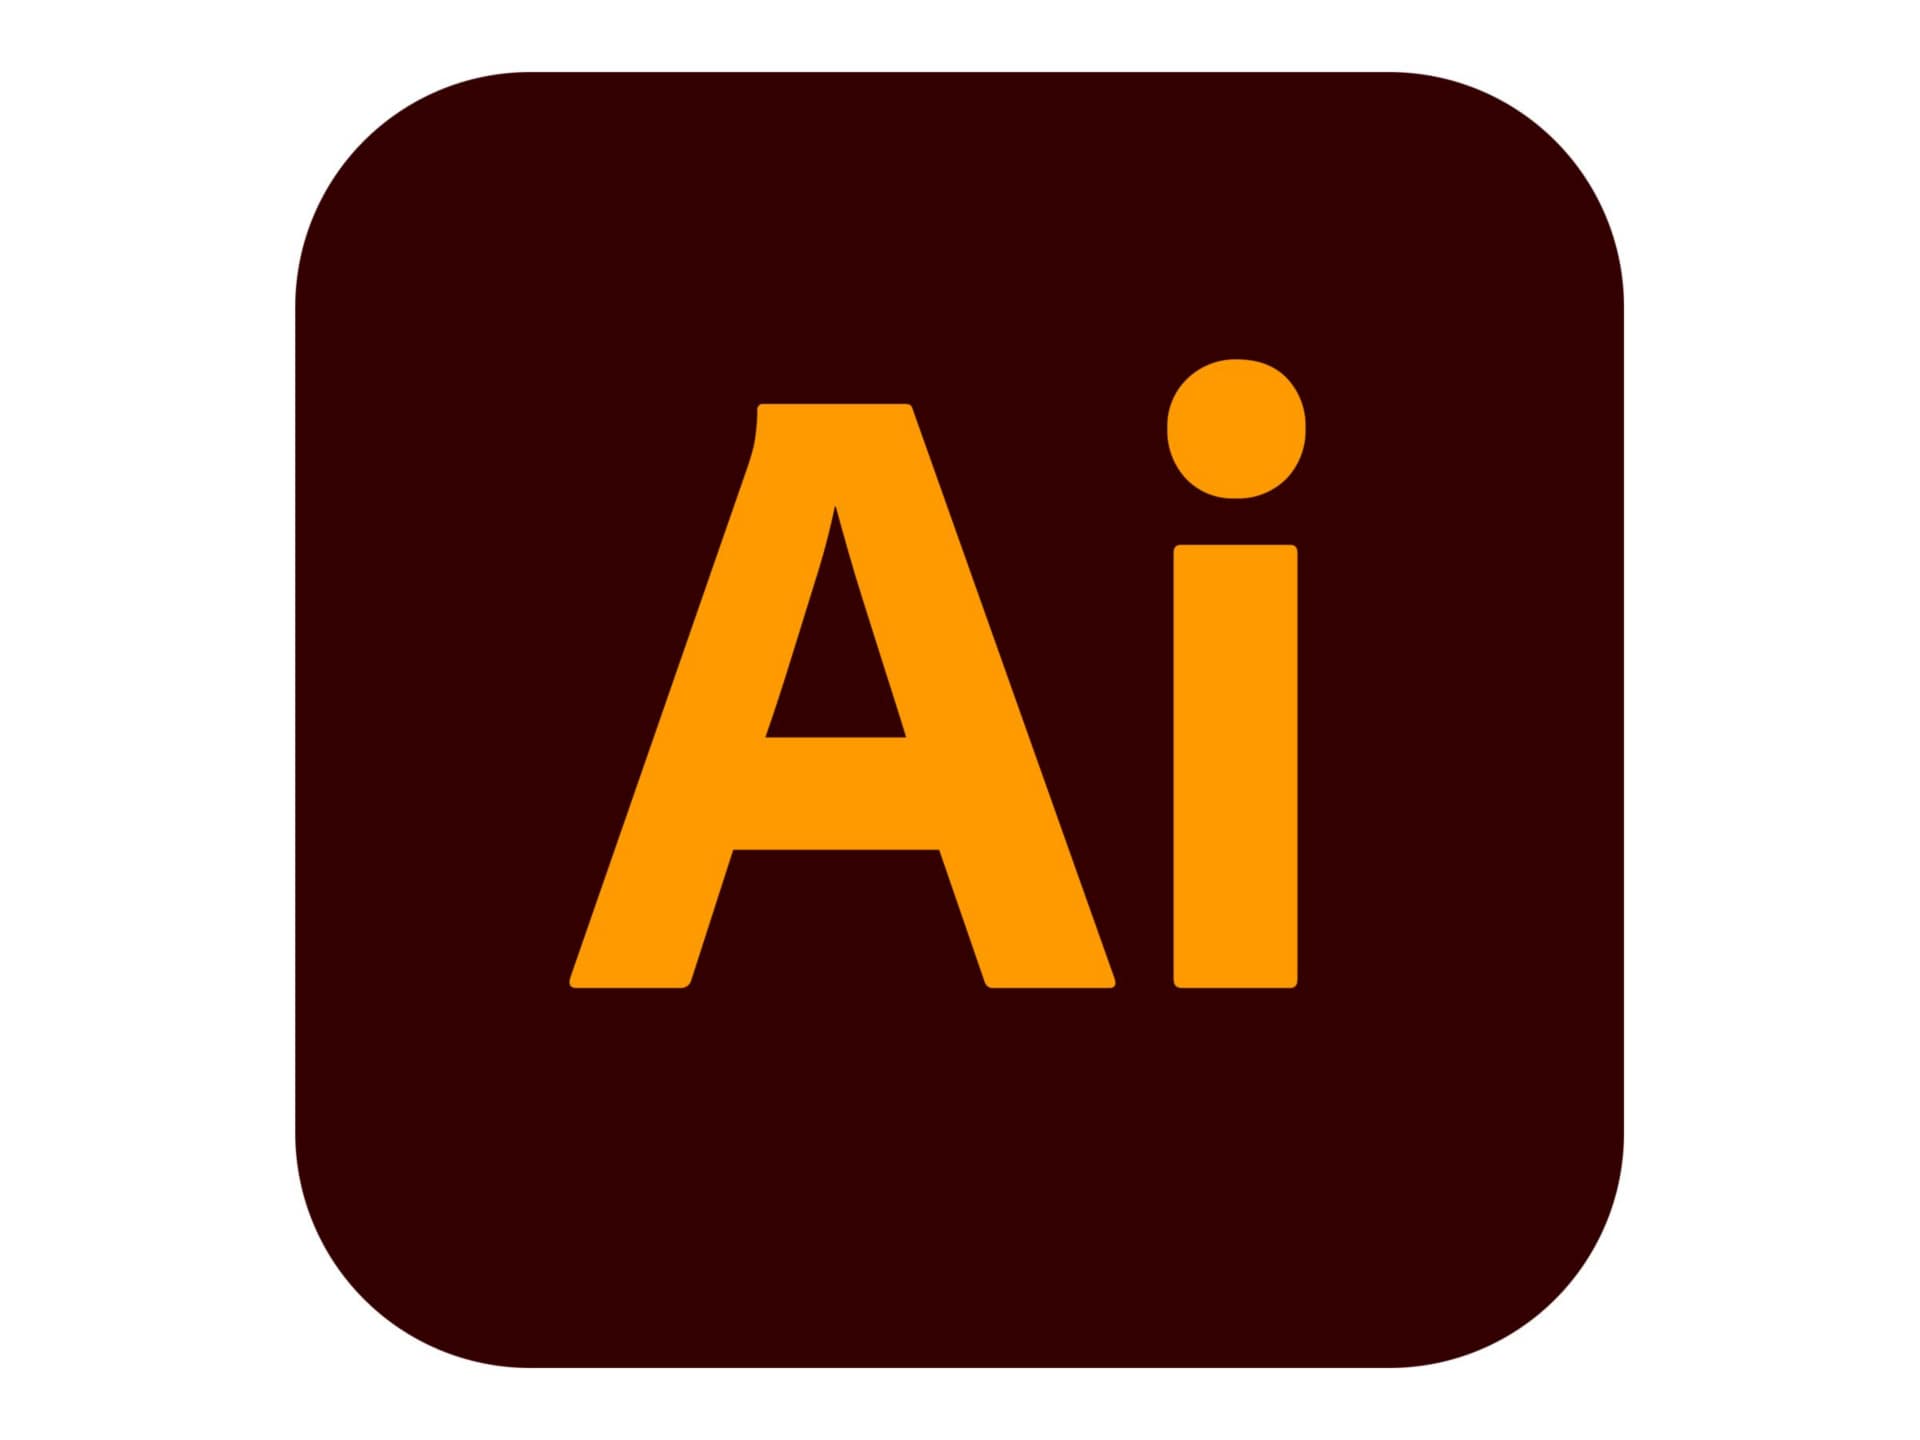 Adobe Illustrator CC for teams - Subscription New - 1 user